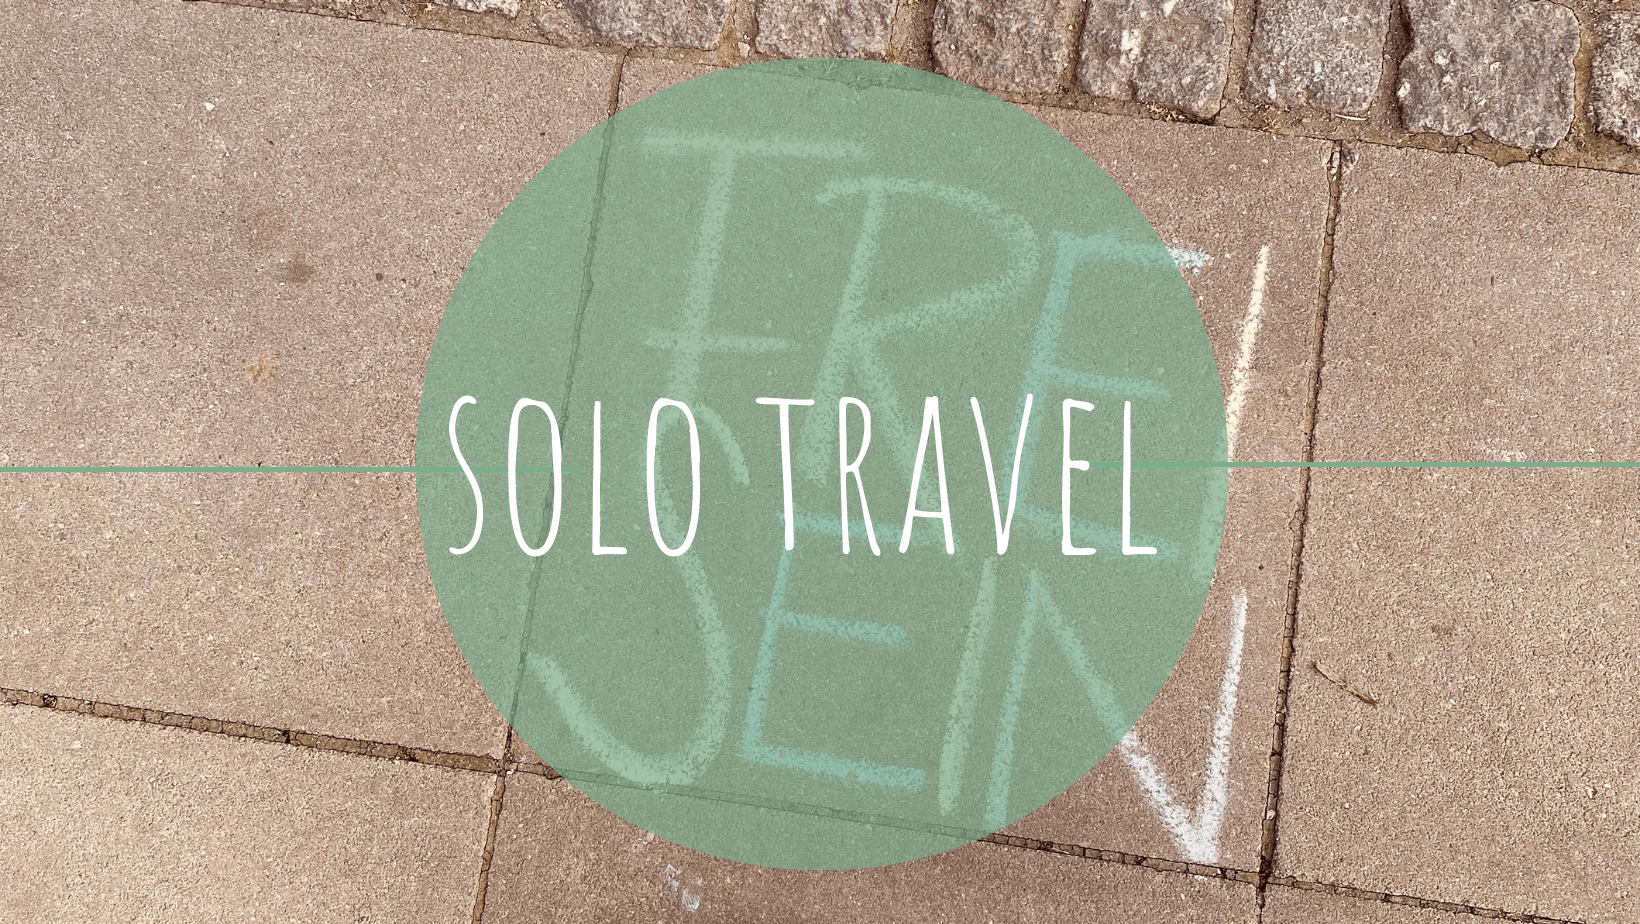 Titel Solo Travel